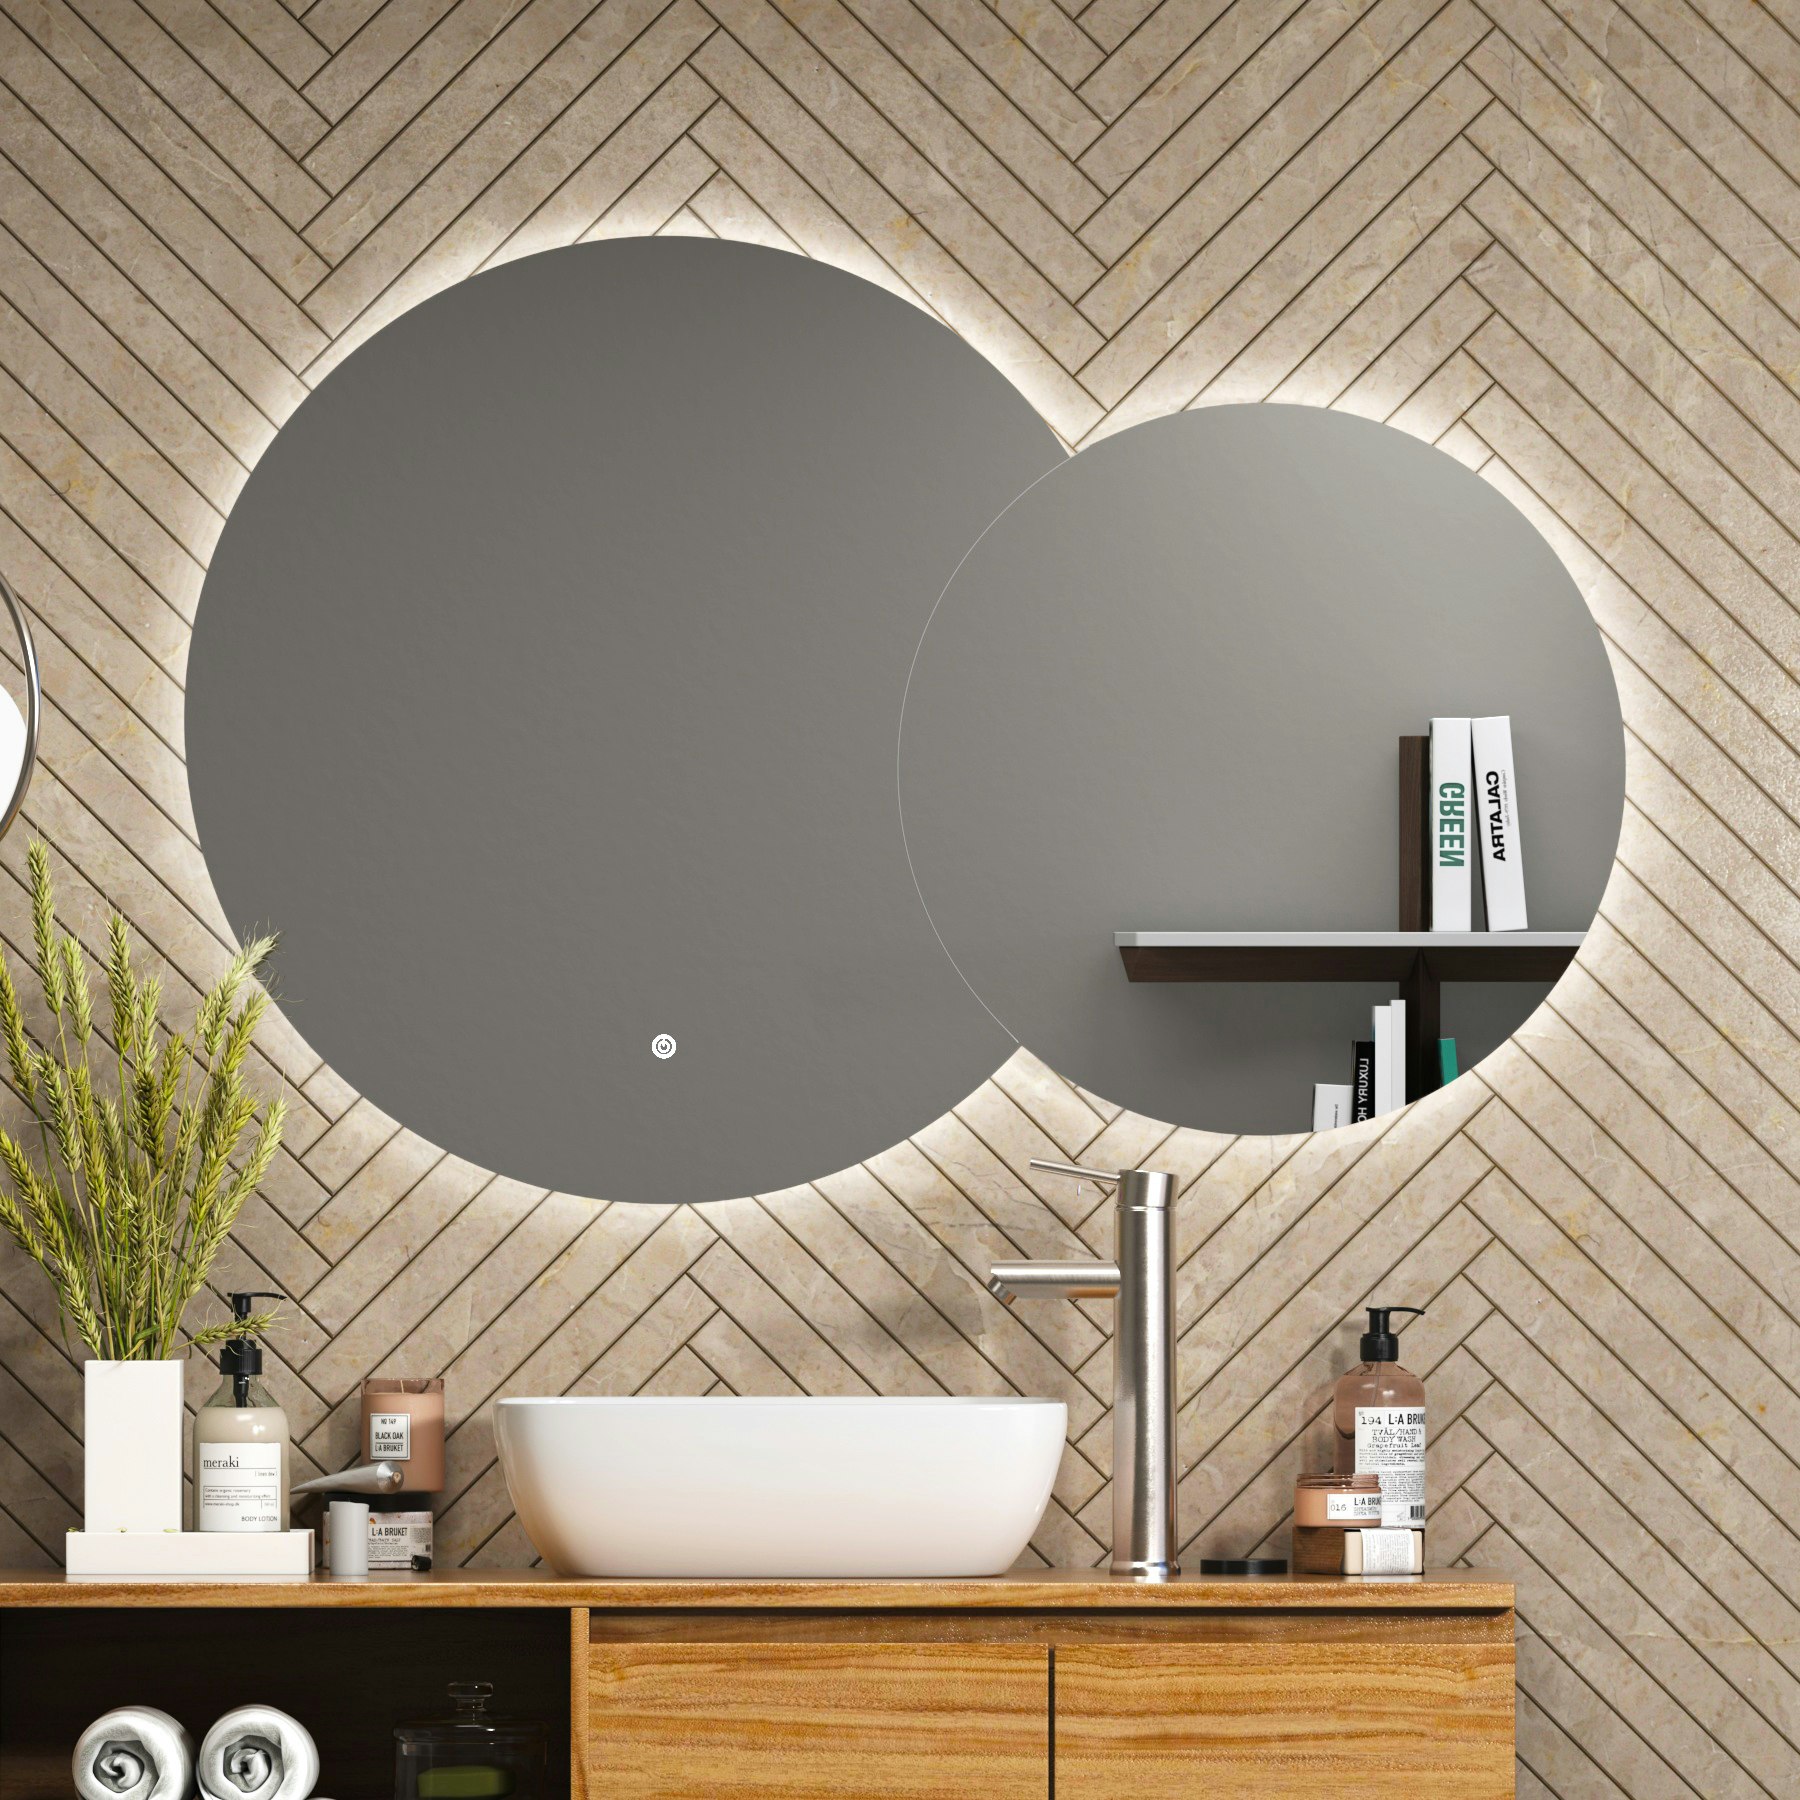 Enso 800 x 600mm Round LED Illuminated Bathroom Twin Mirror - Anti-Fog